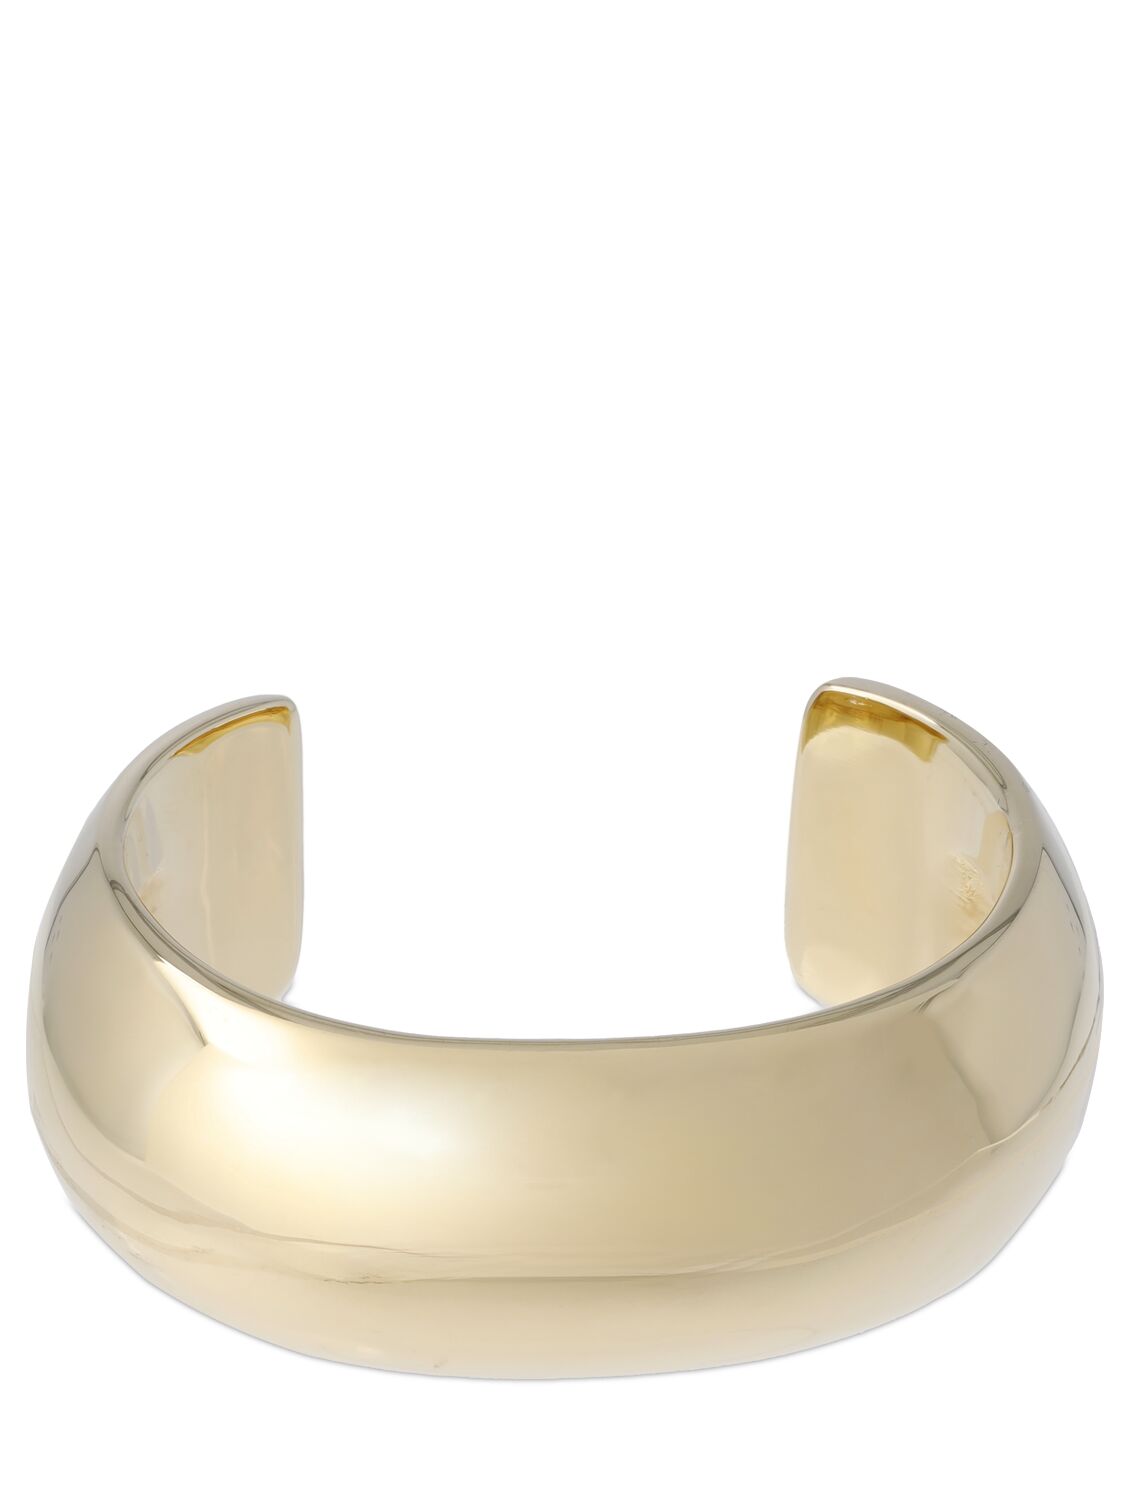 The Small Globe Cuff Bracelet